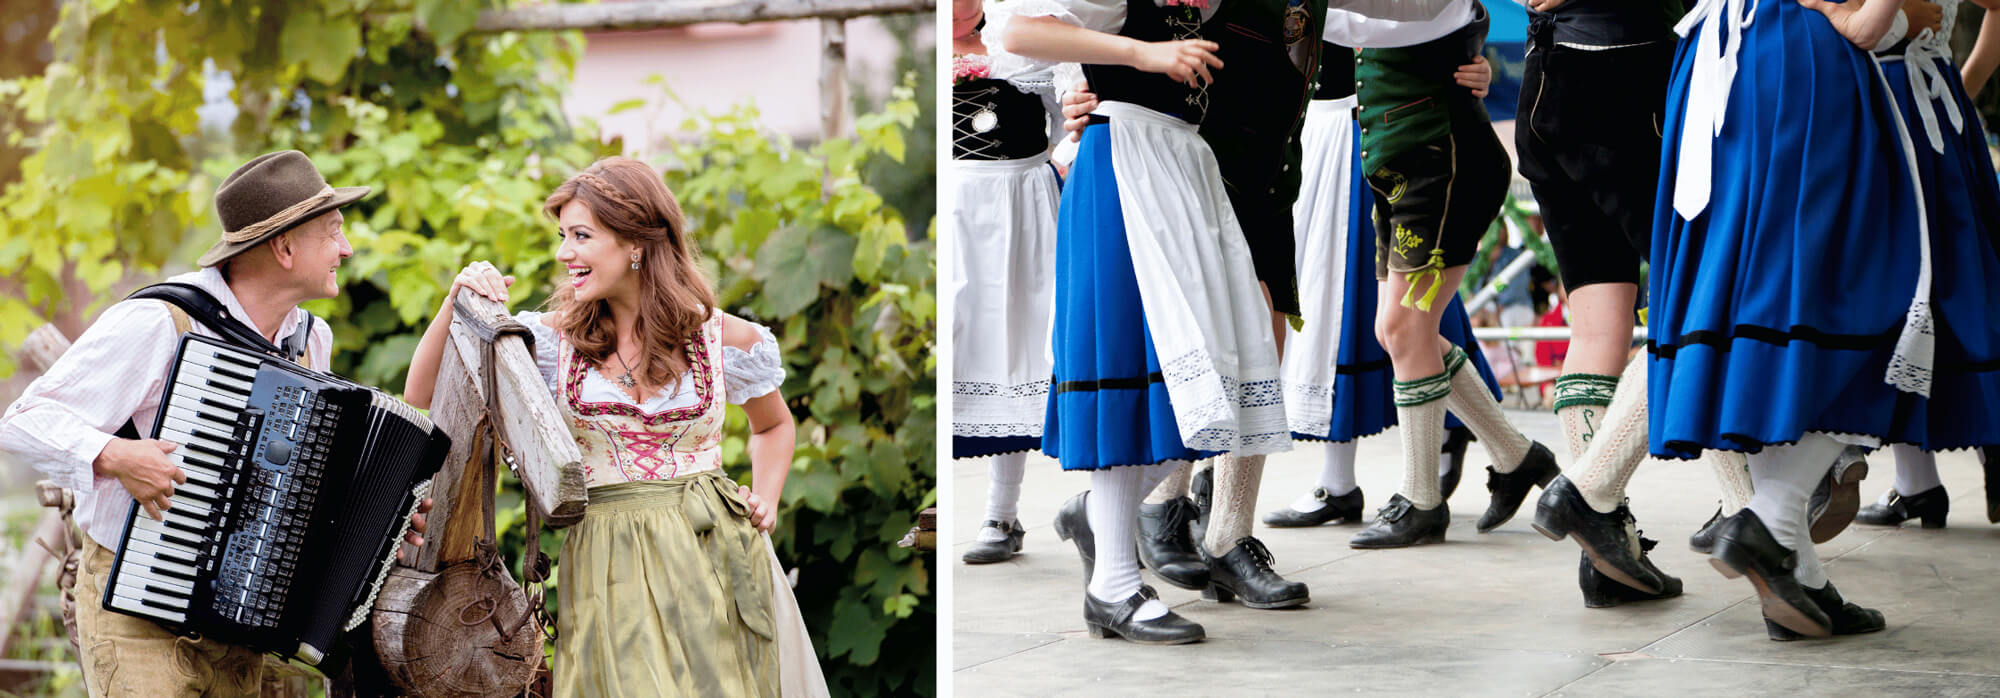 Hosts Global | Discover Bavarian folk music in Germany